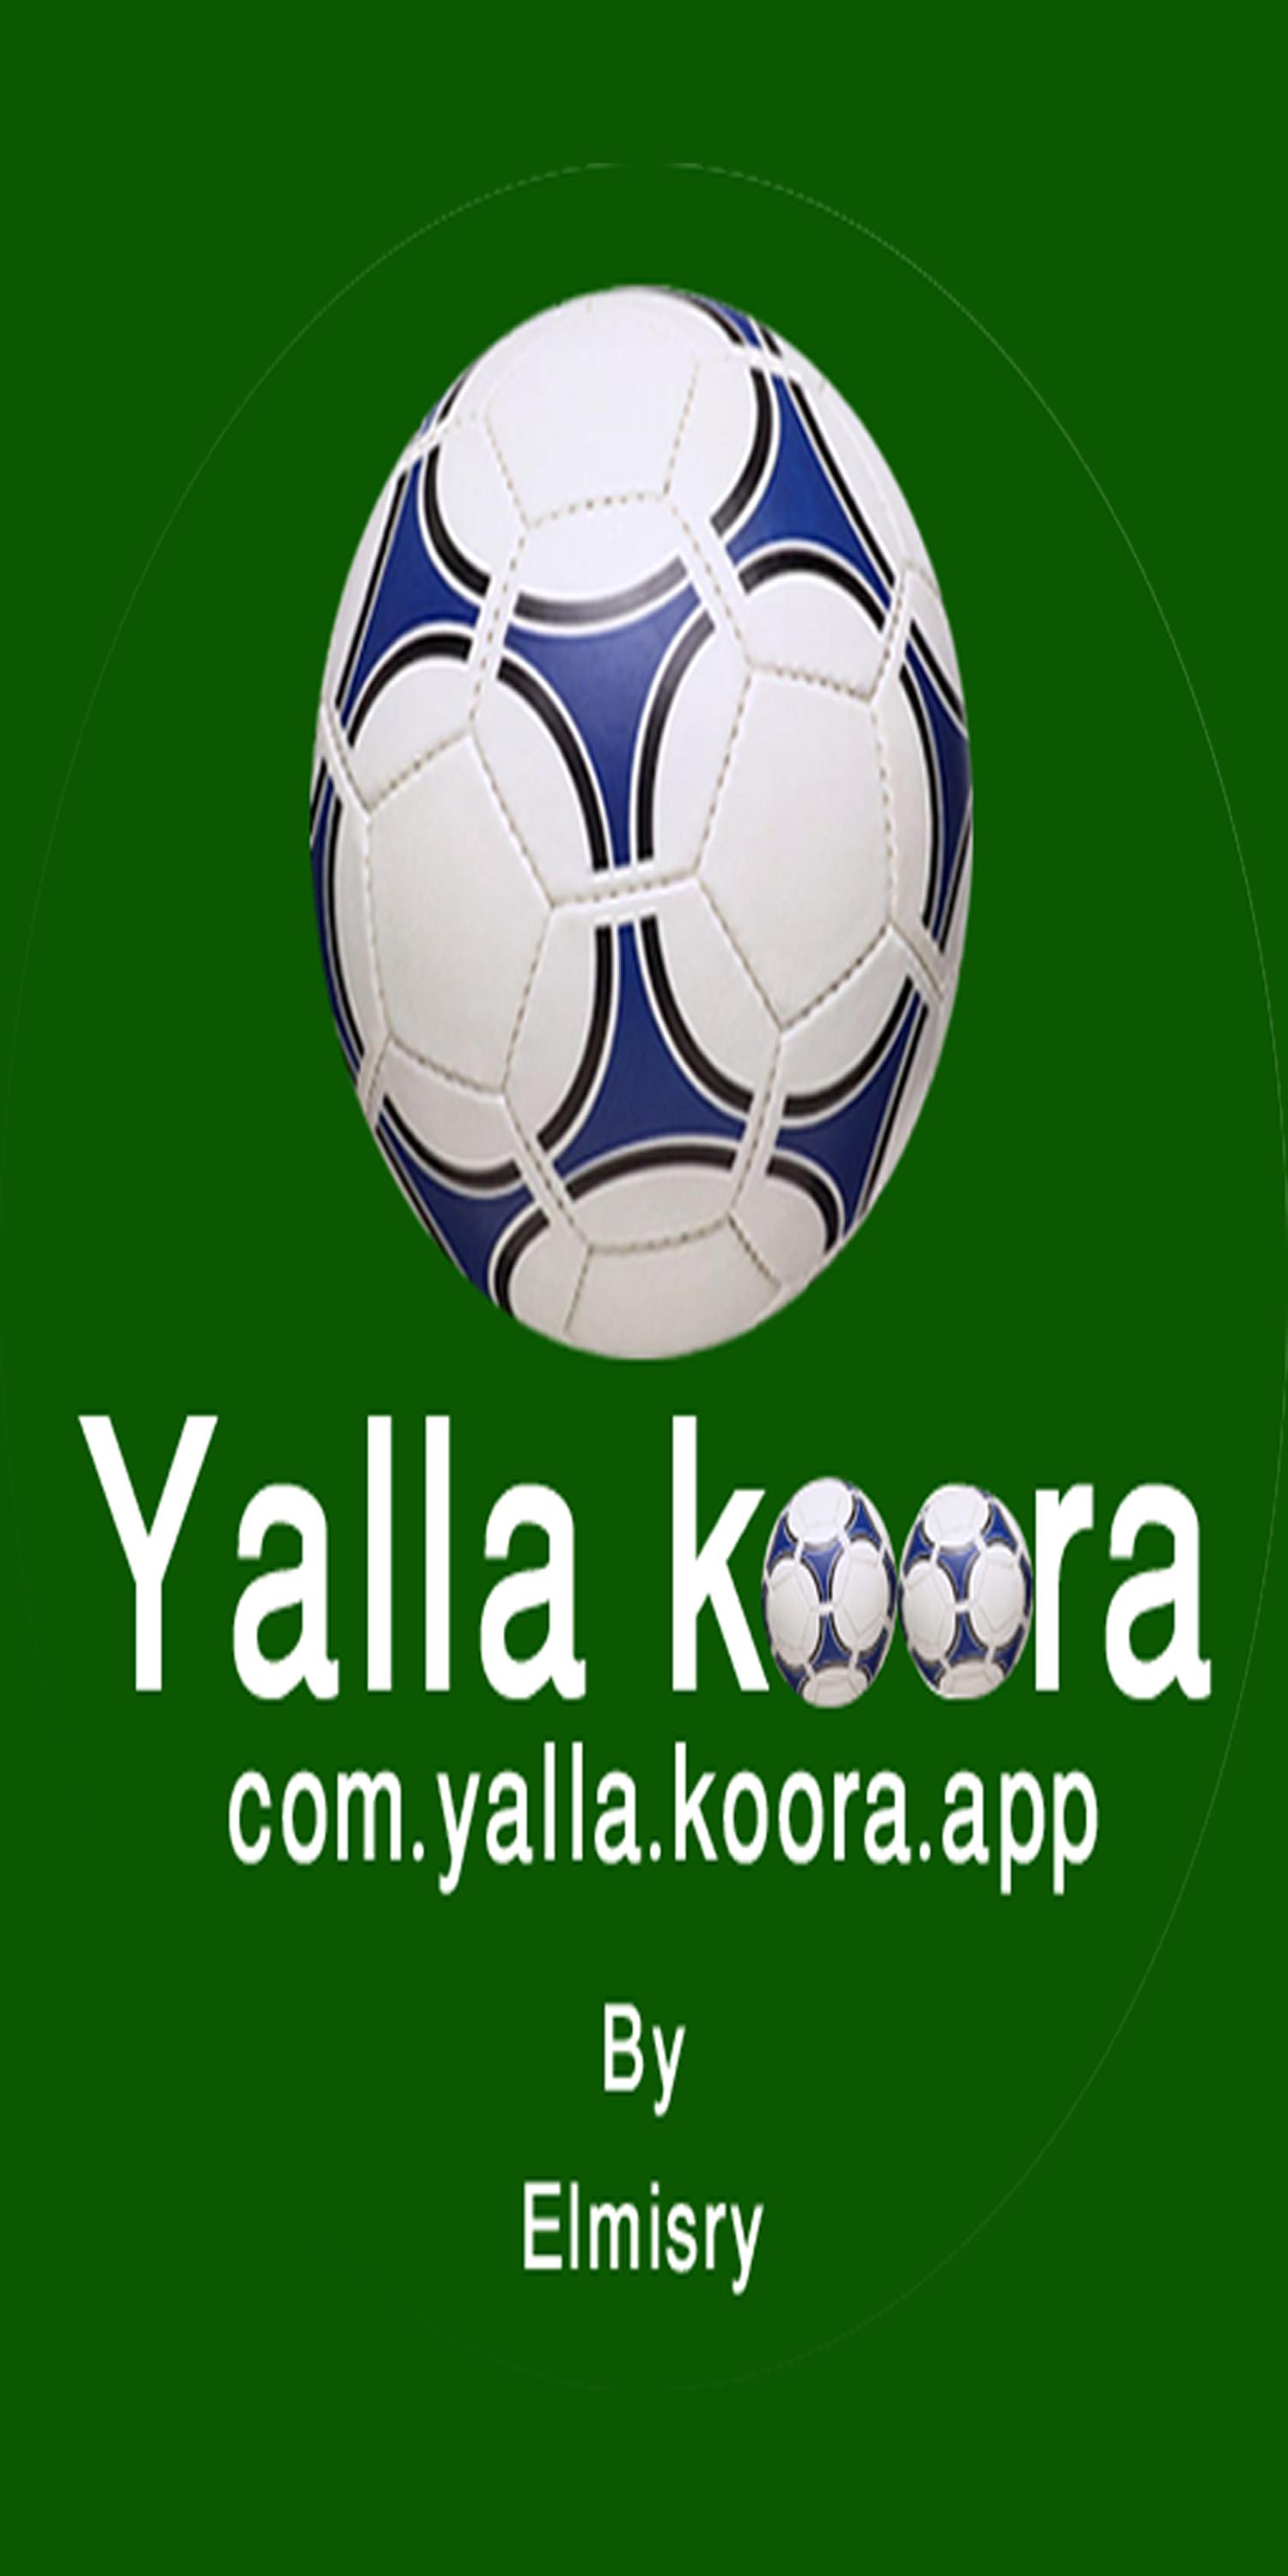 يلا كرة for Android - APK Download